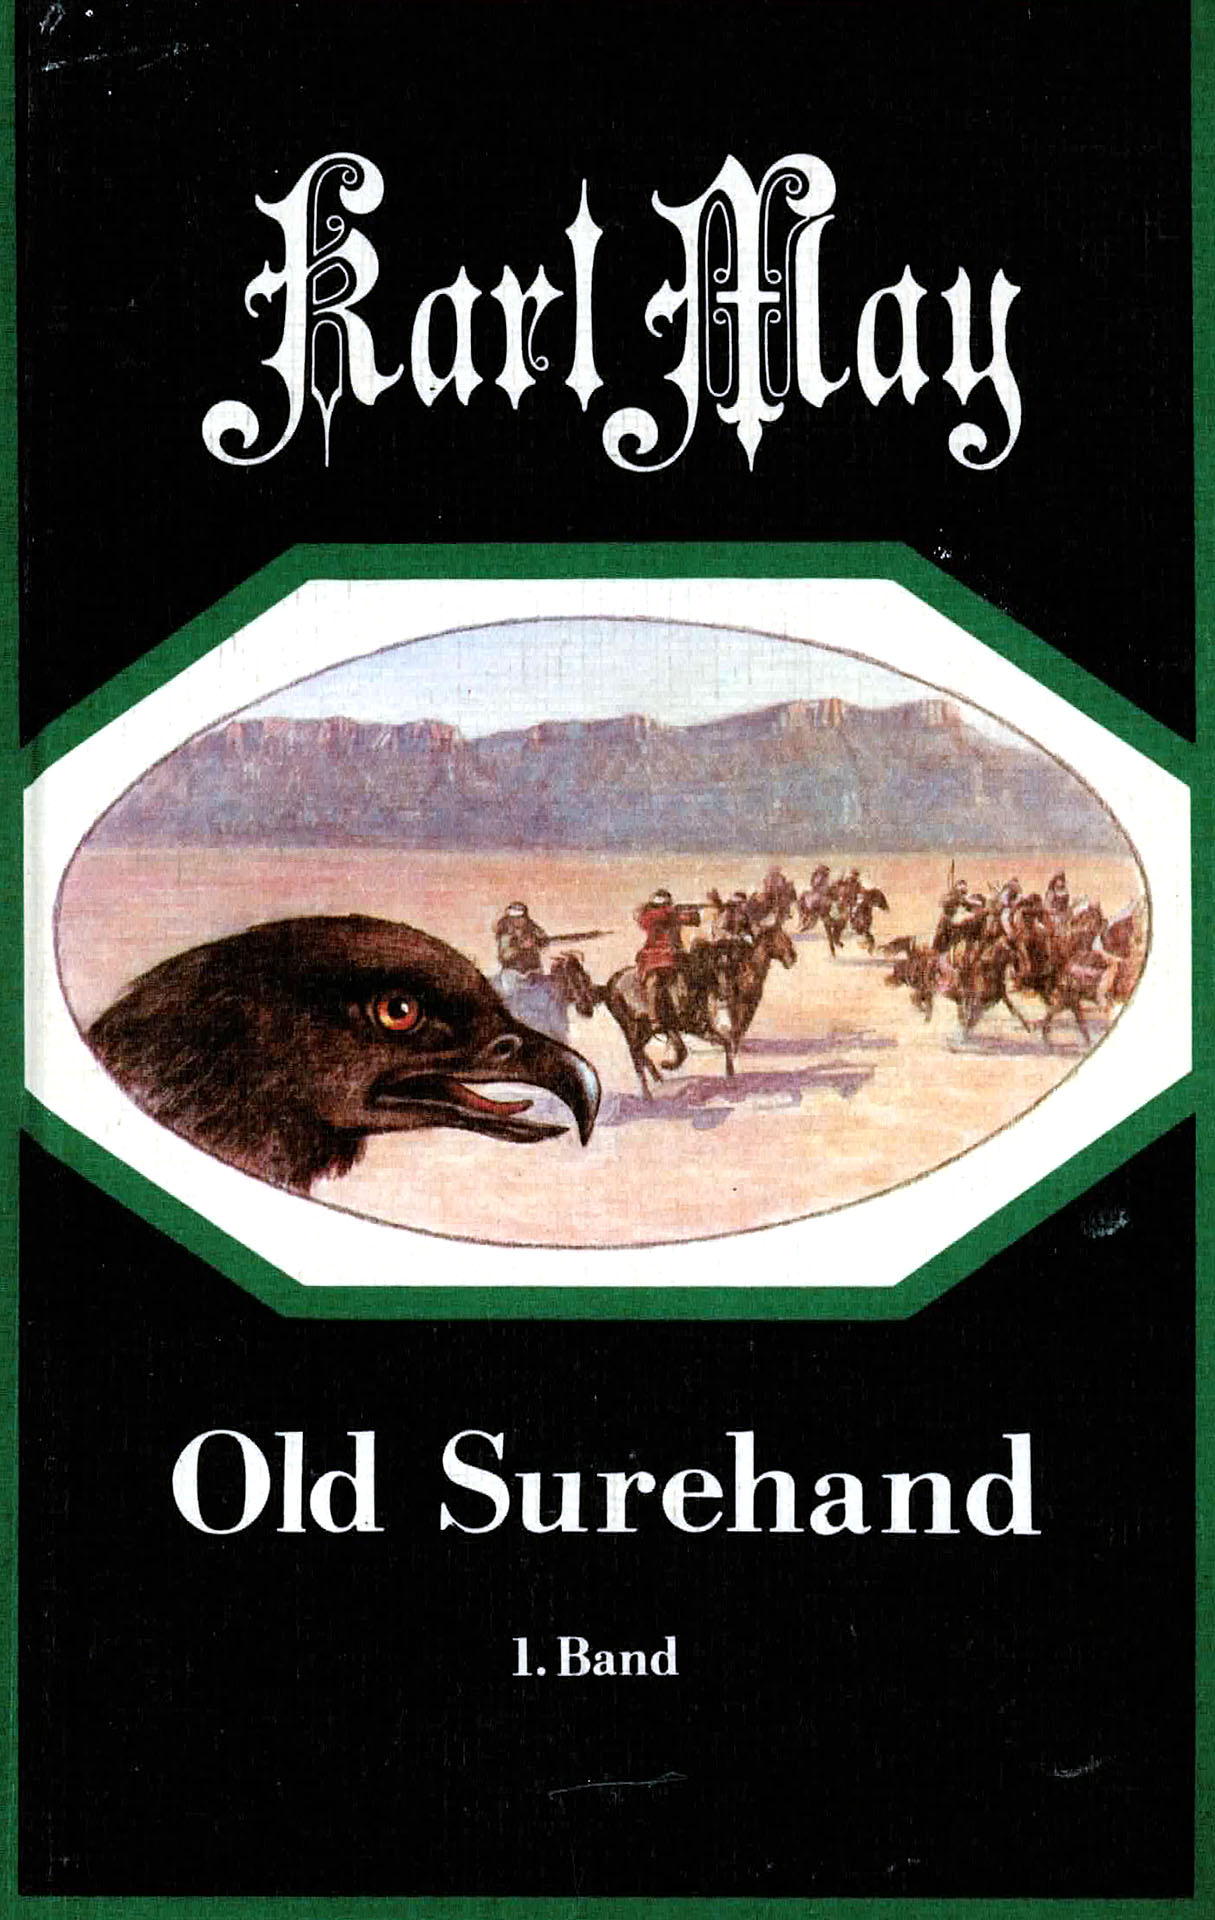 Old Surehand - May, Karl